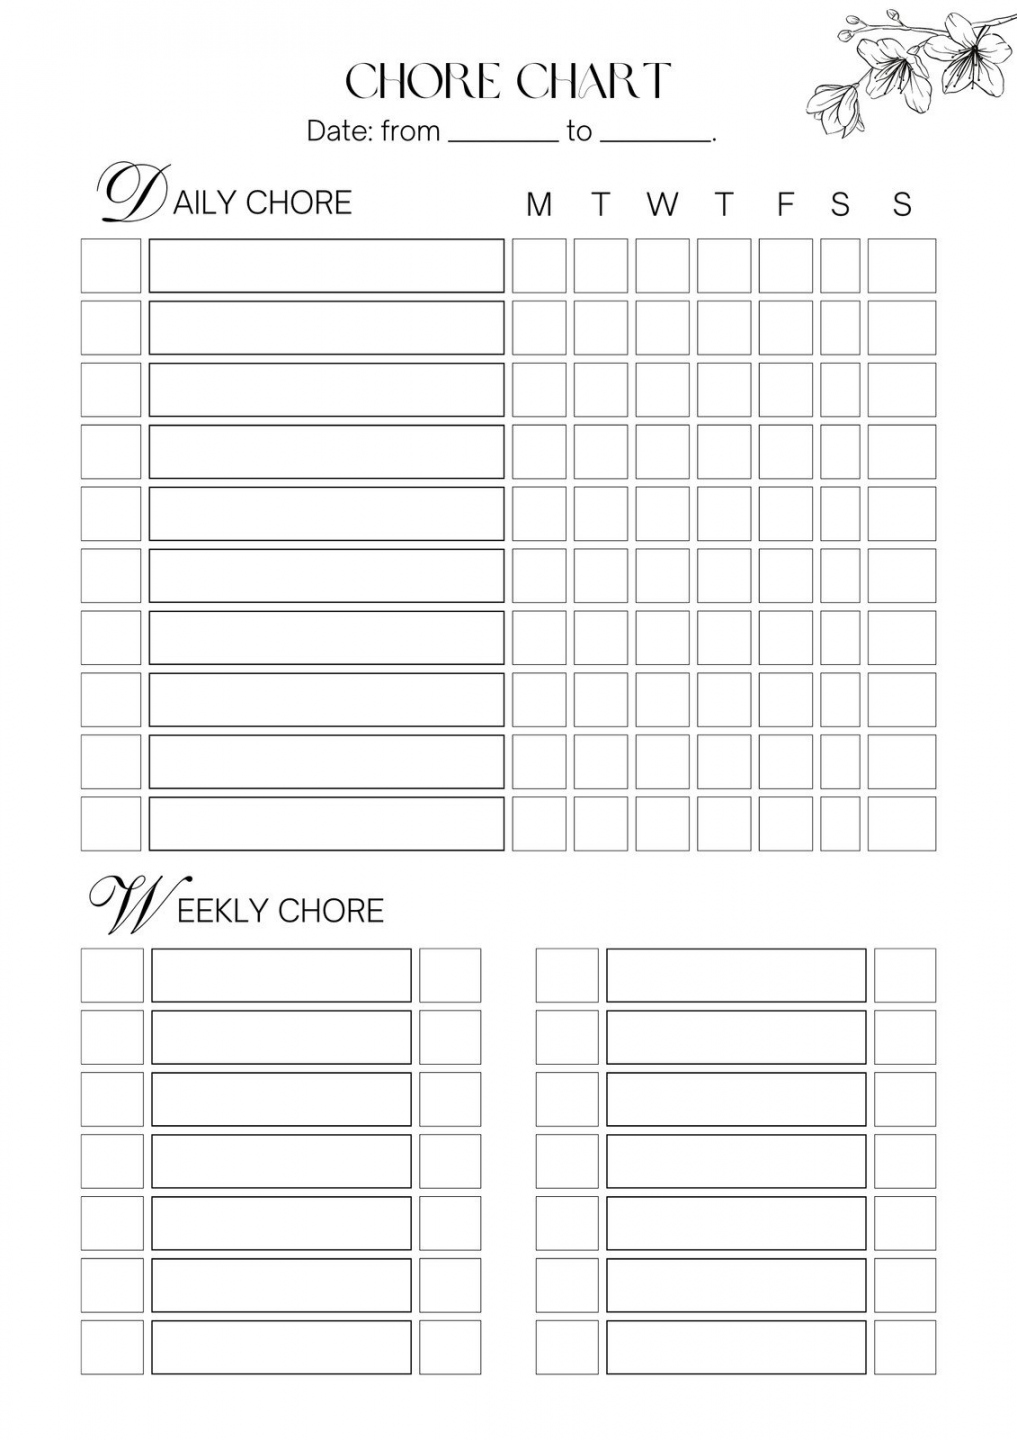 Customizable Free Printable Chore Charts - Printable - Free customizable chore chart templates to print  Canva